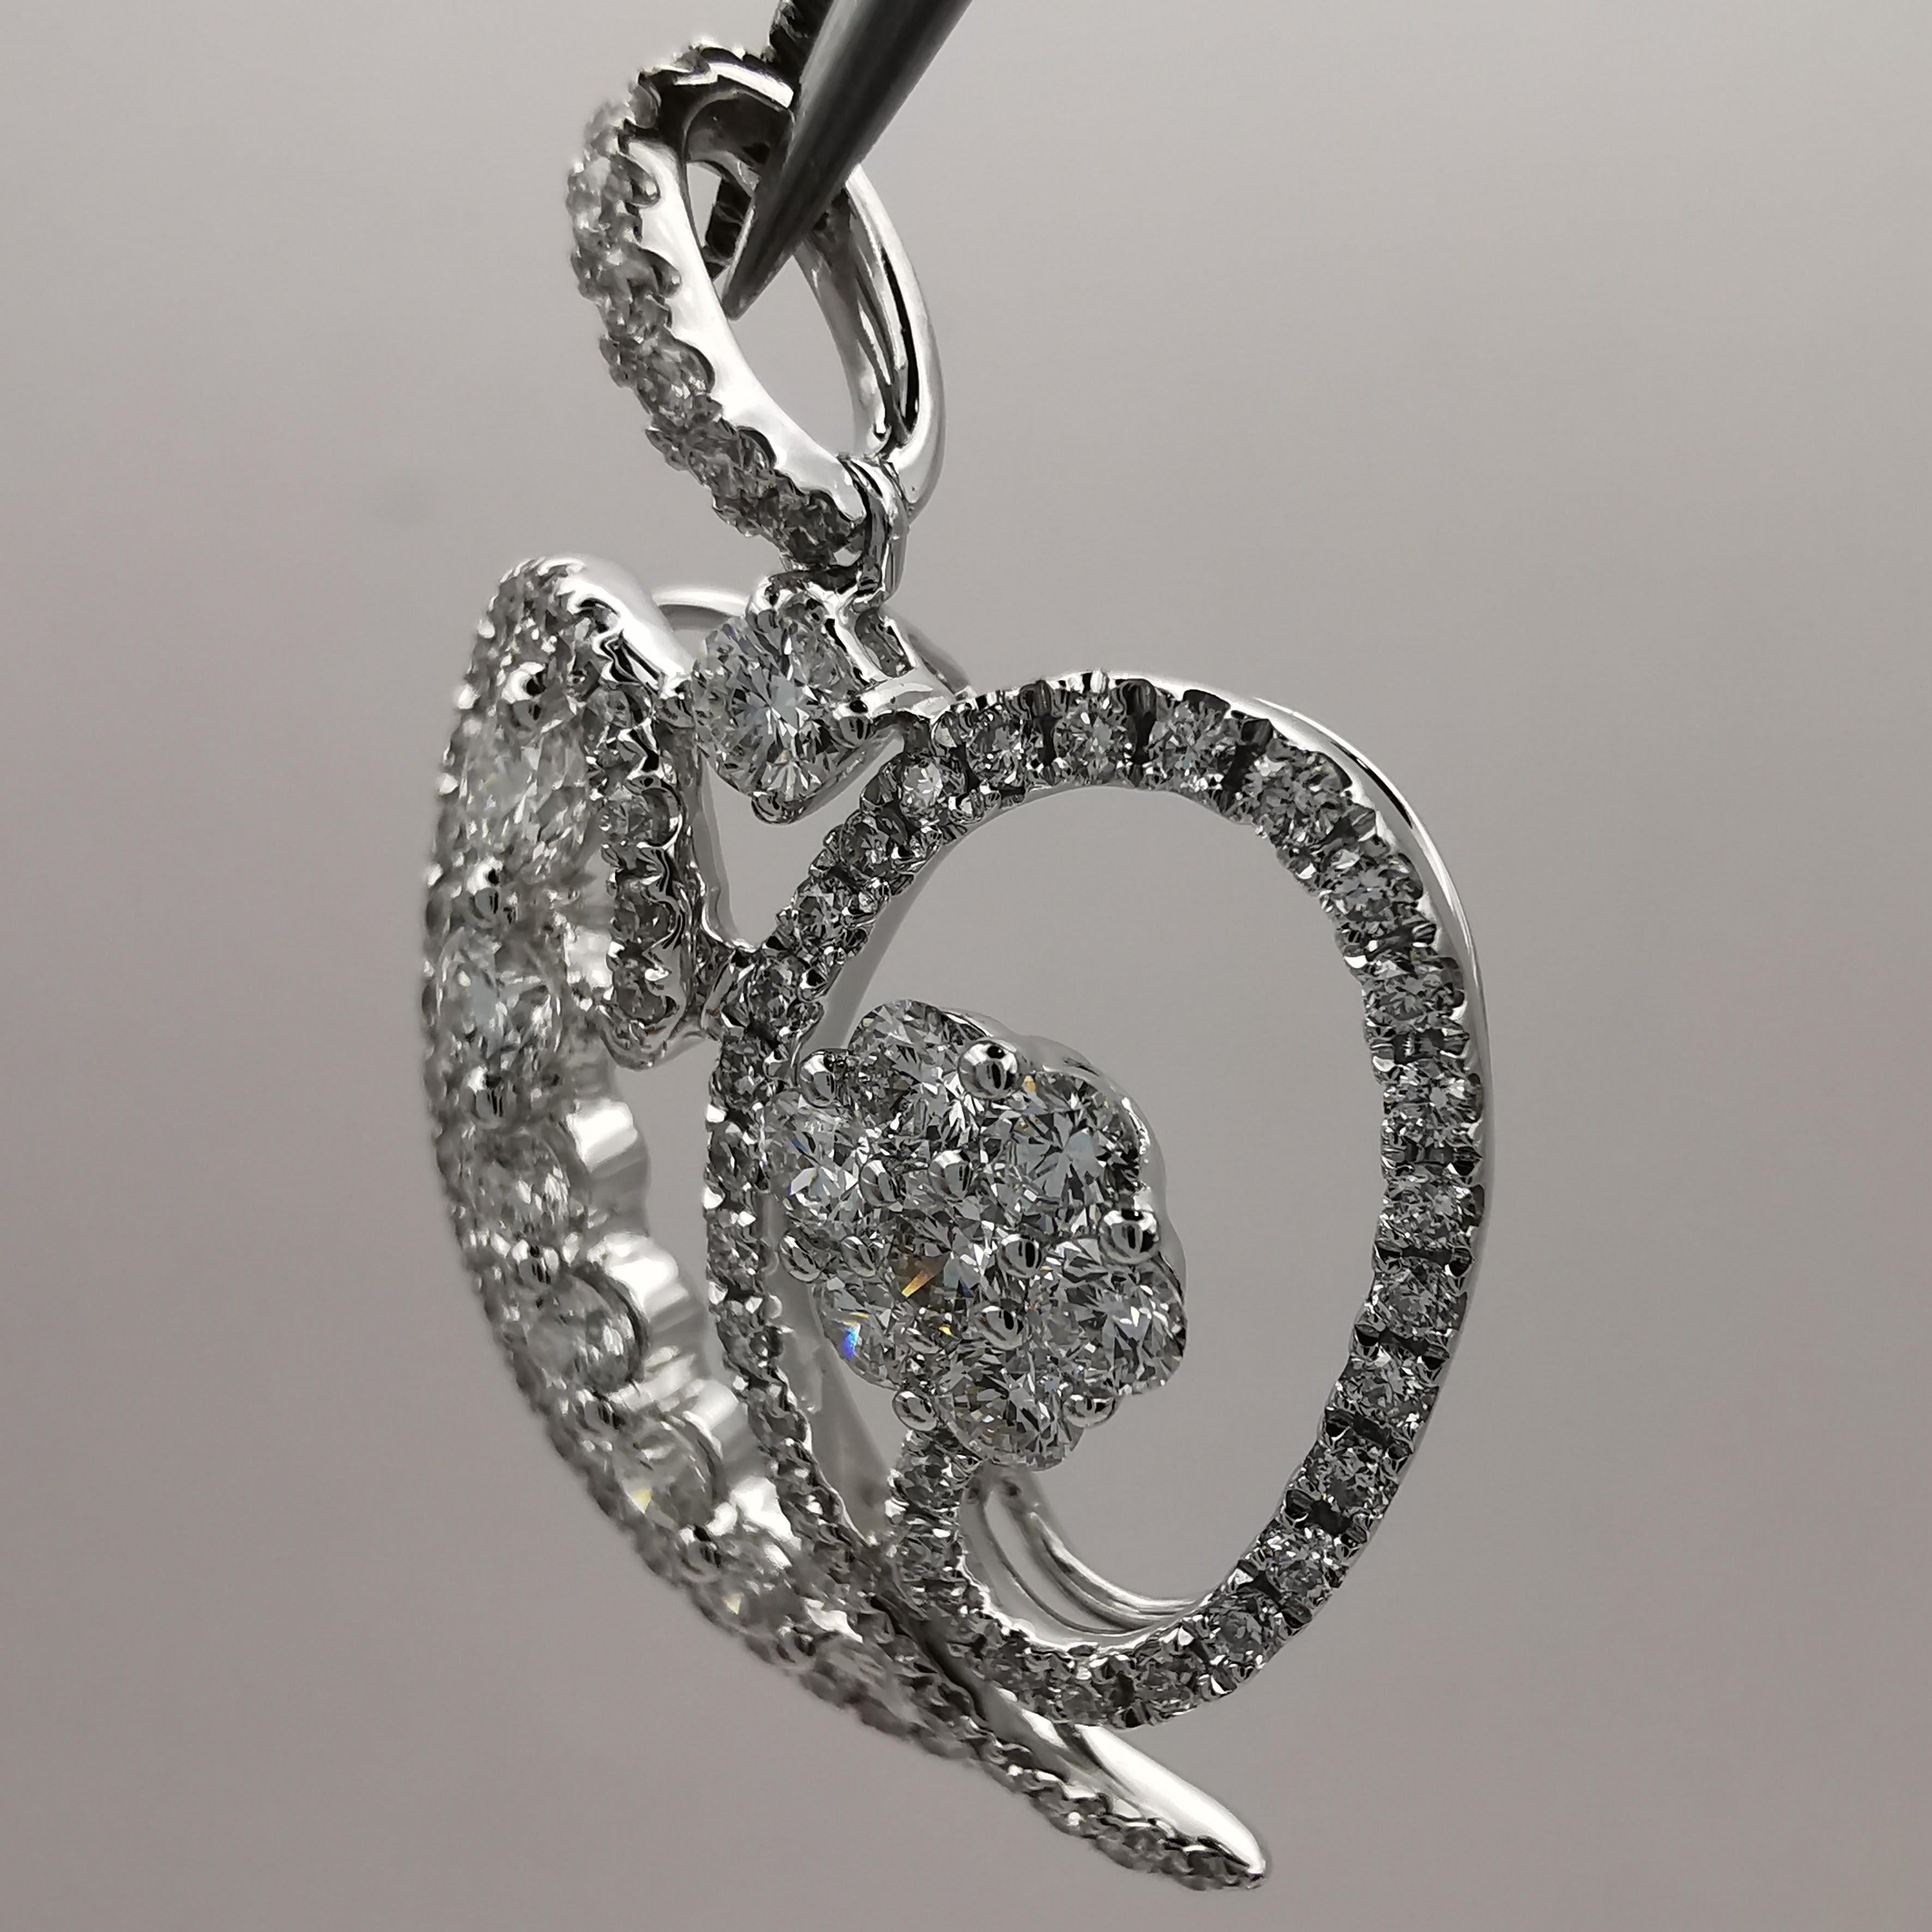 Heart-shaped Bell Pepper .97 Carat Diamond 18K White Gold Pendant Necklace For Sale 6